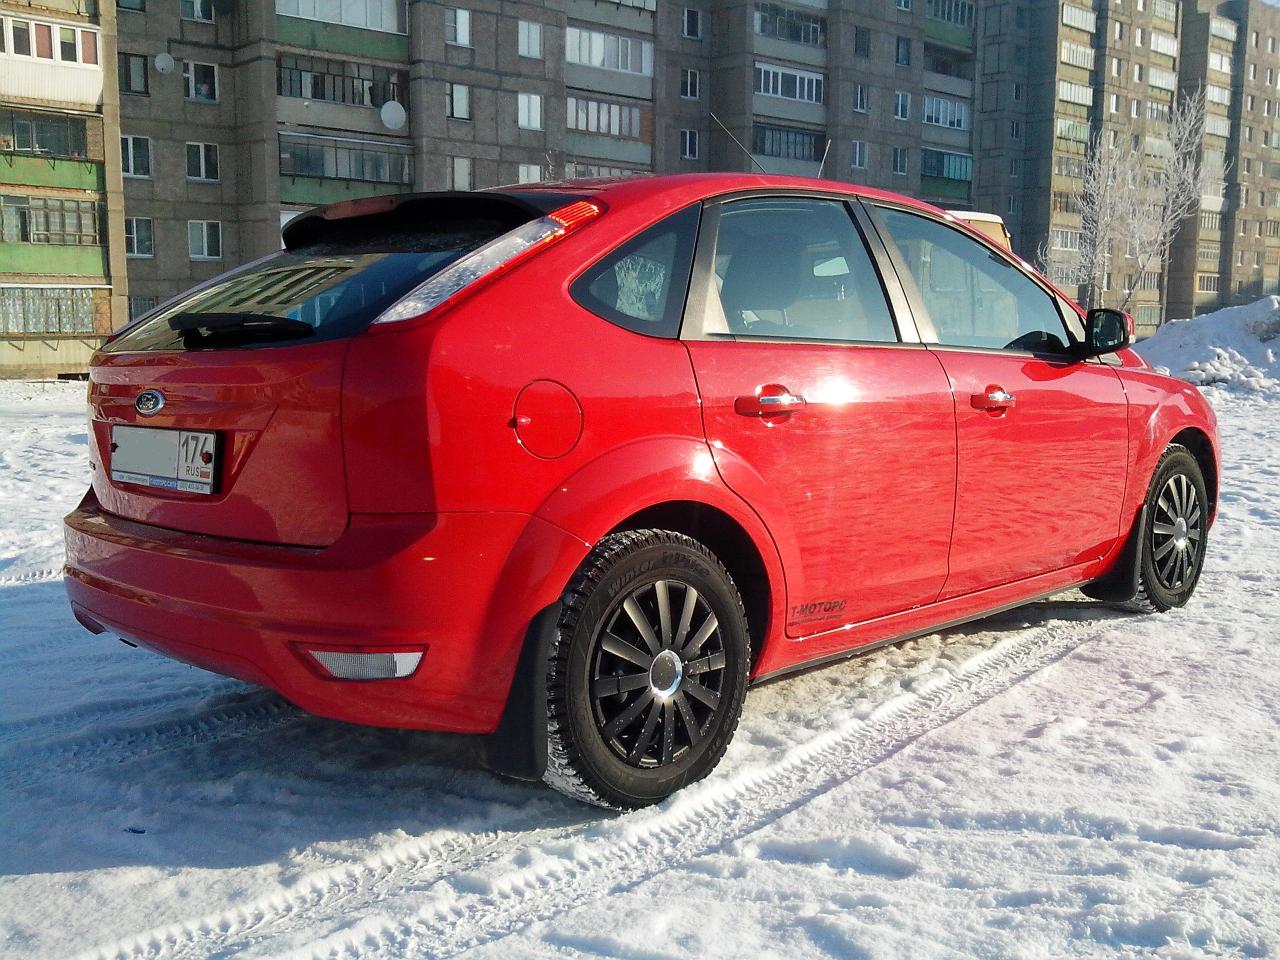 Ford Focus 2011 года, 305 рублей › Usedcars.ru ...